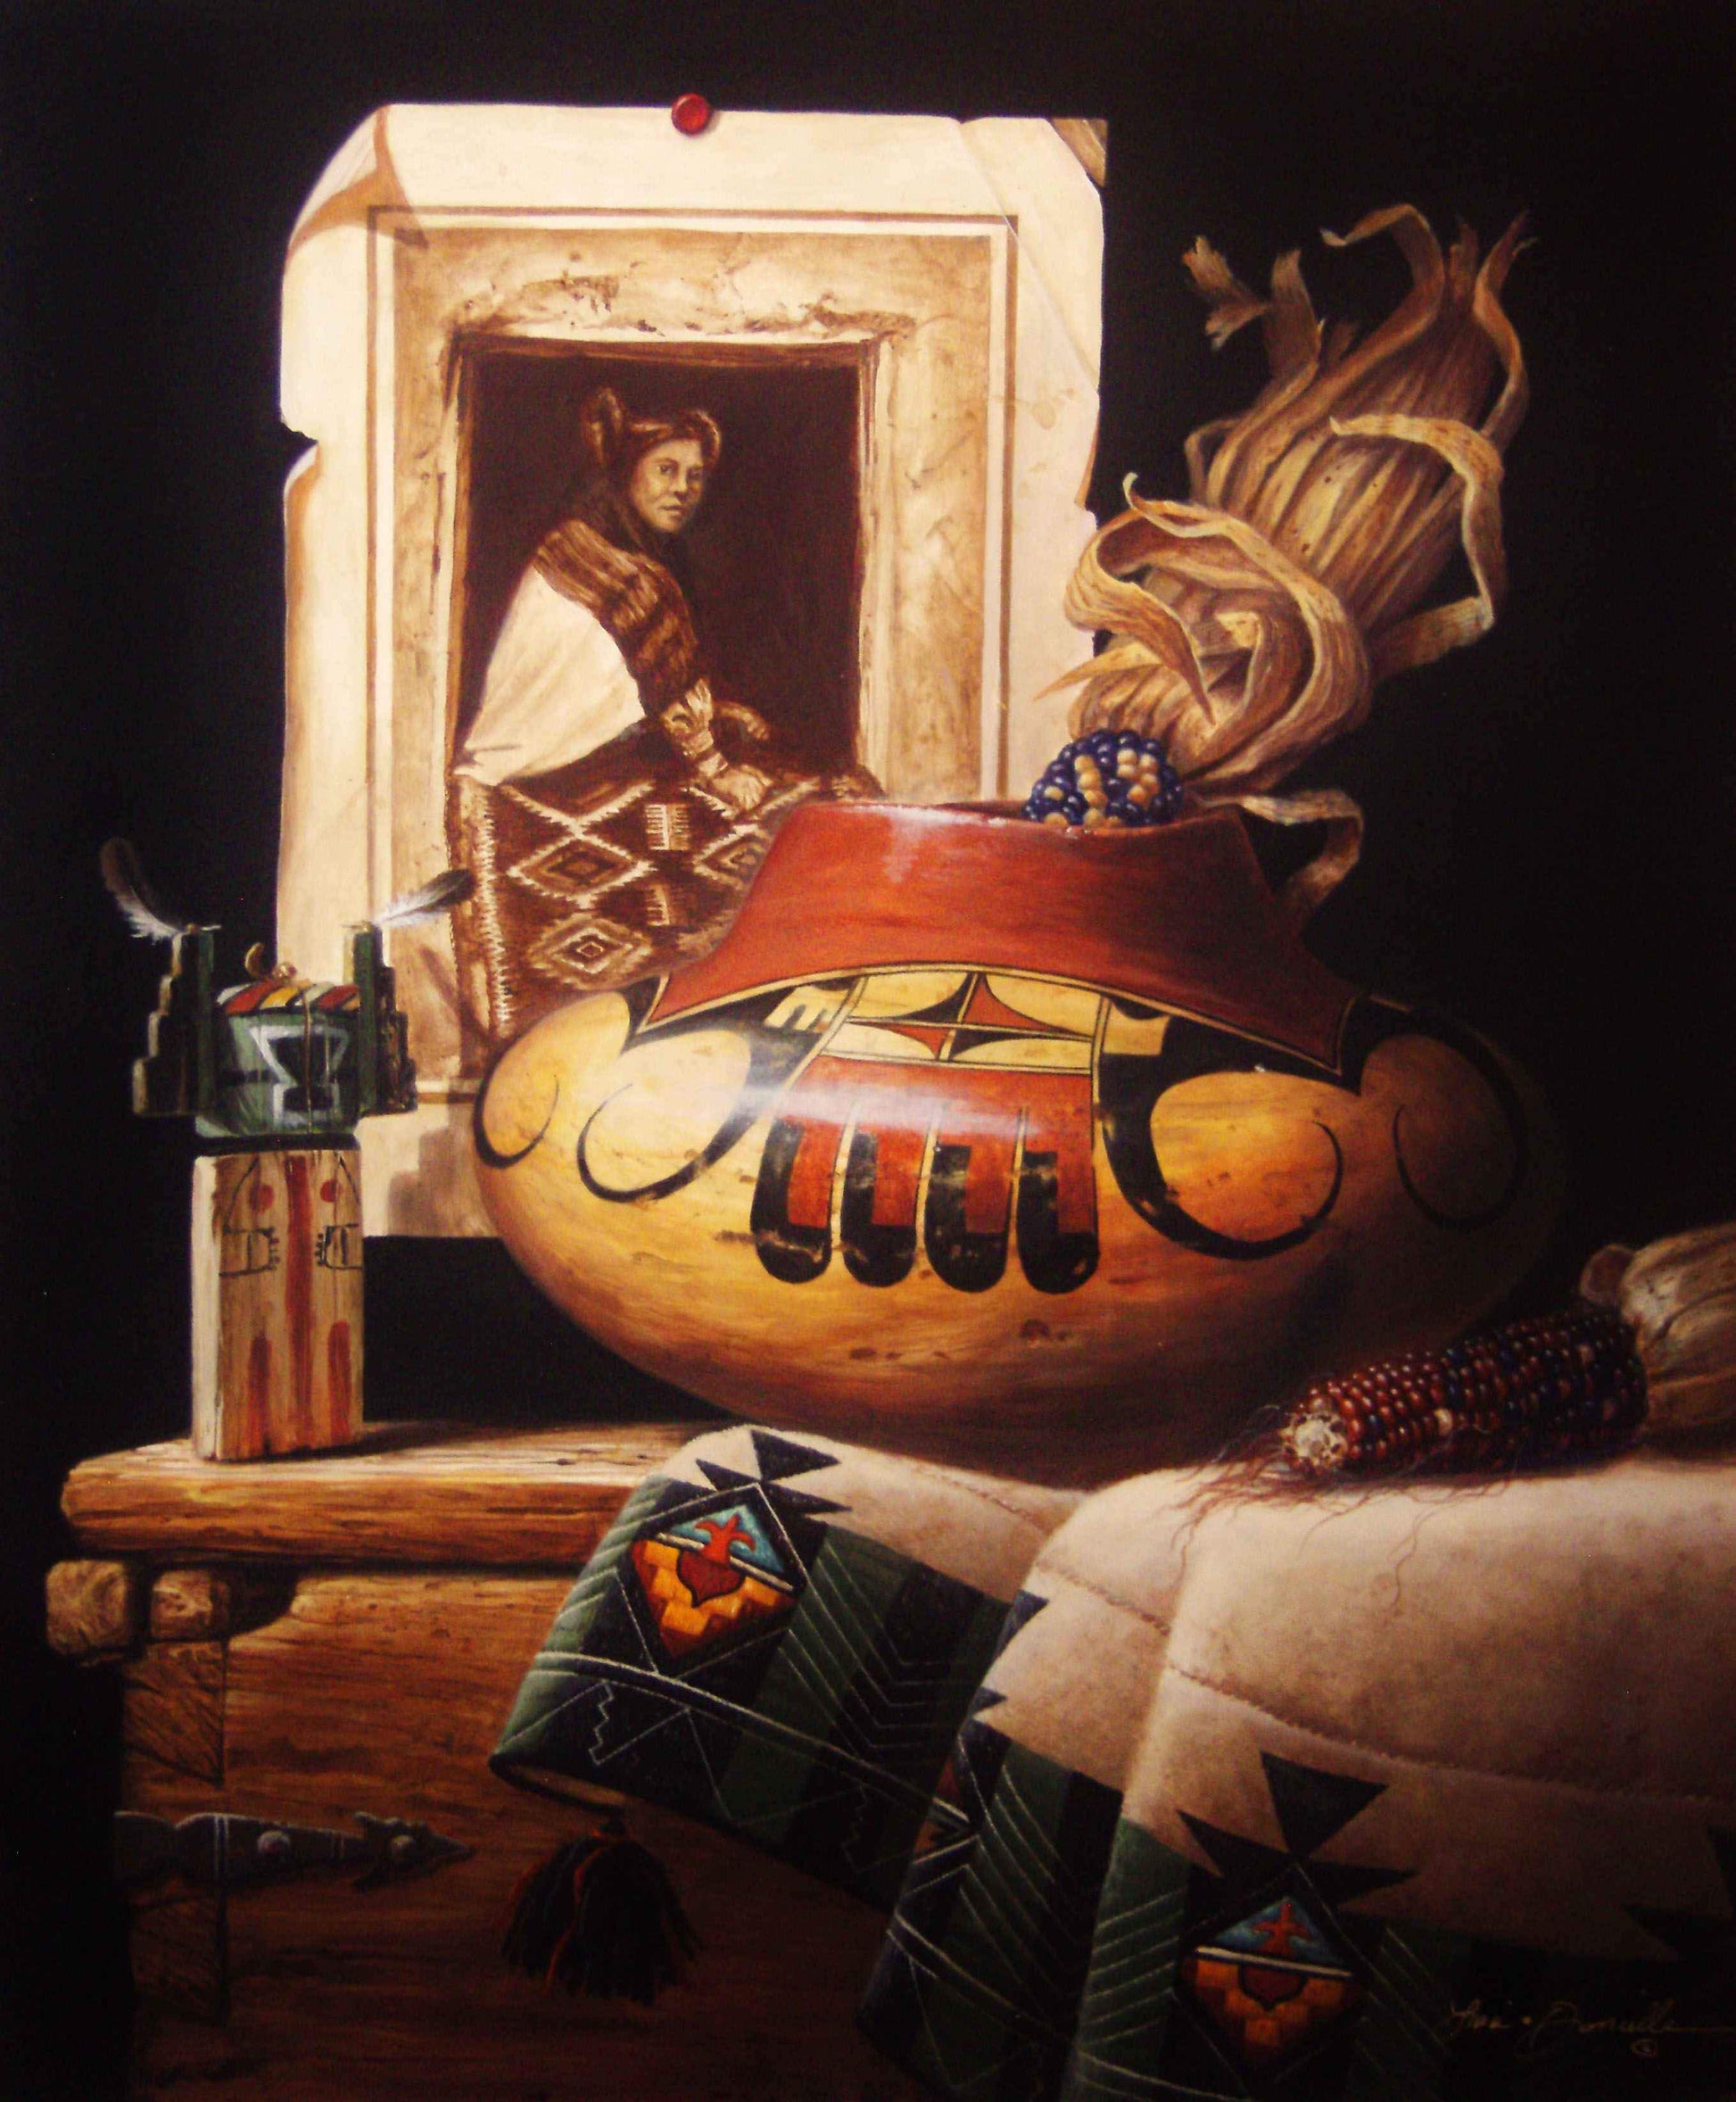 Hopi Country-Lisa Danielle-Sorrel Sky Gallery